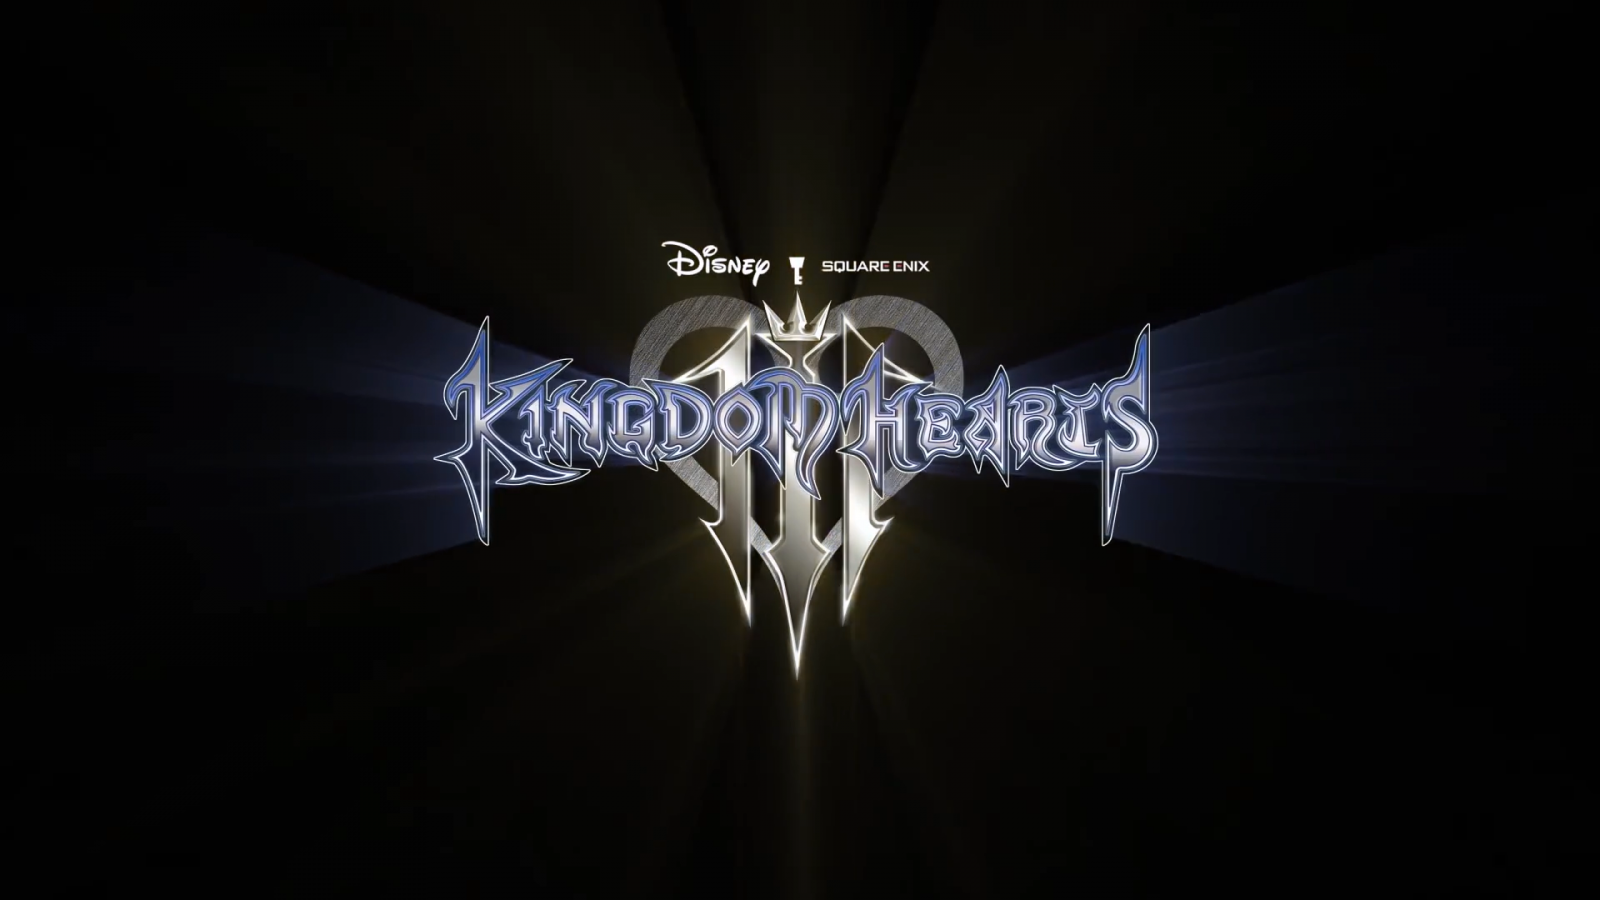 KINGDOM HEARTS III – Opening Movie Trailer 